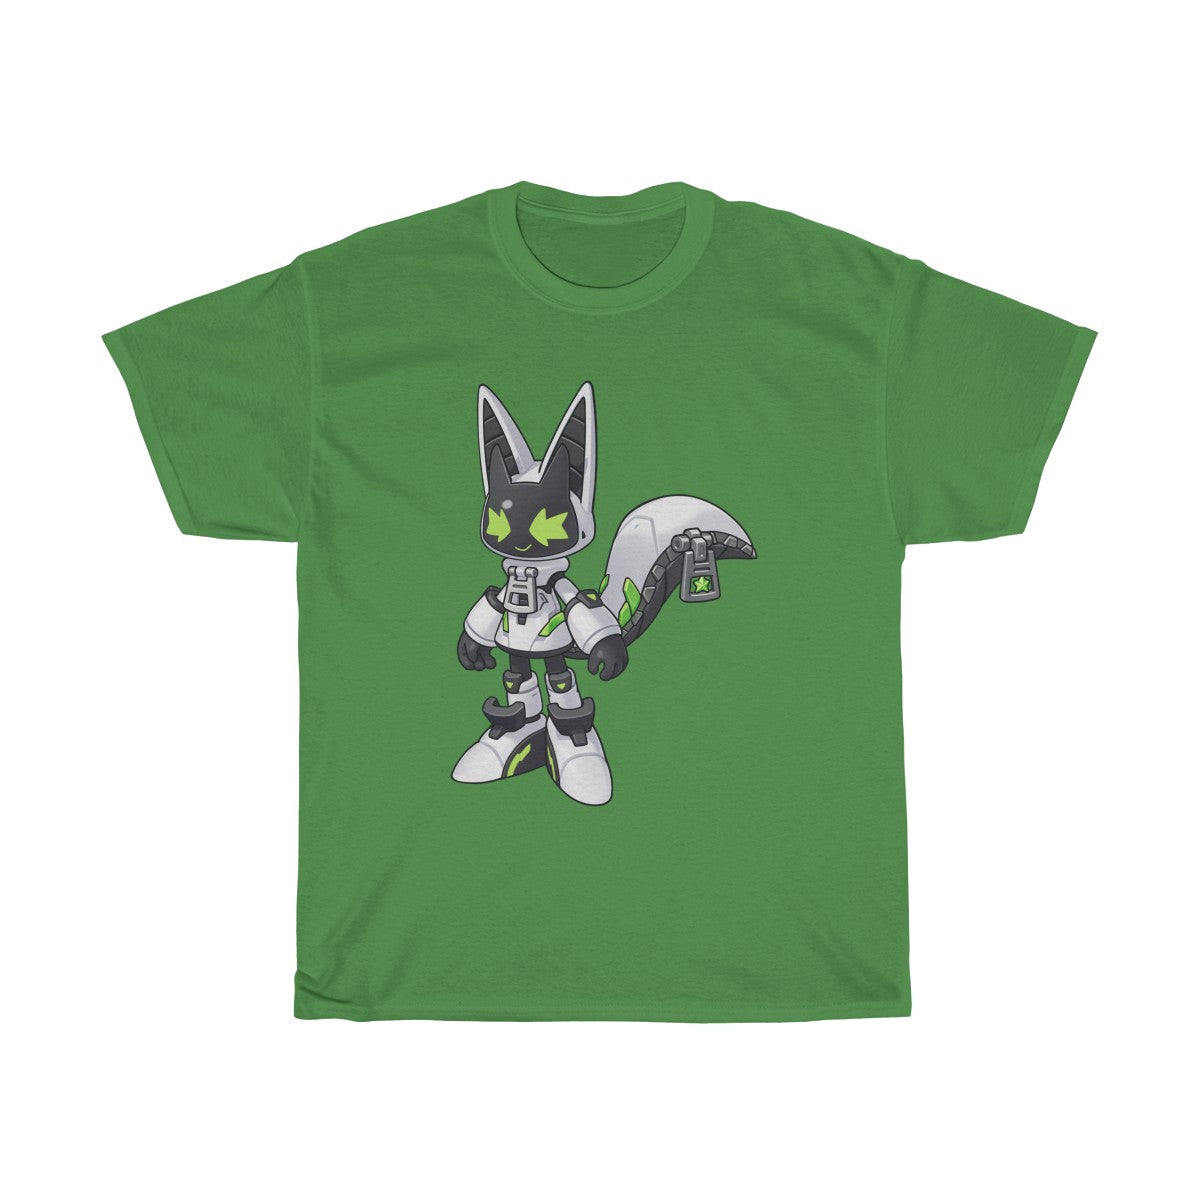 Yandroid - T-Shirt T-Shirt Lordyan Green S 